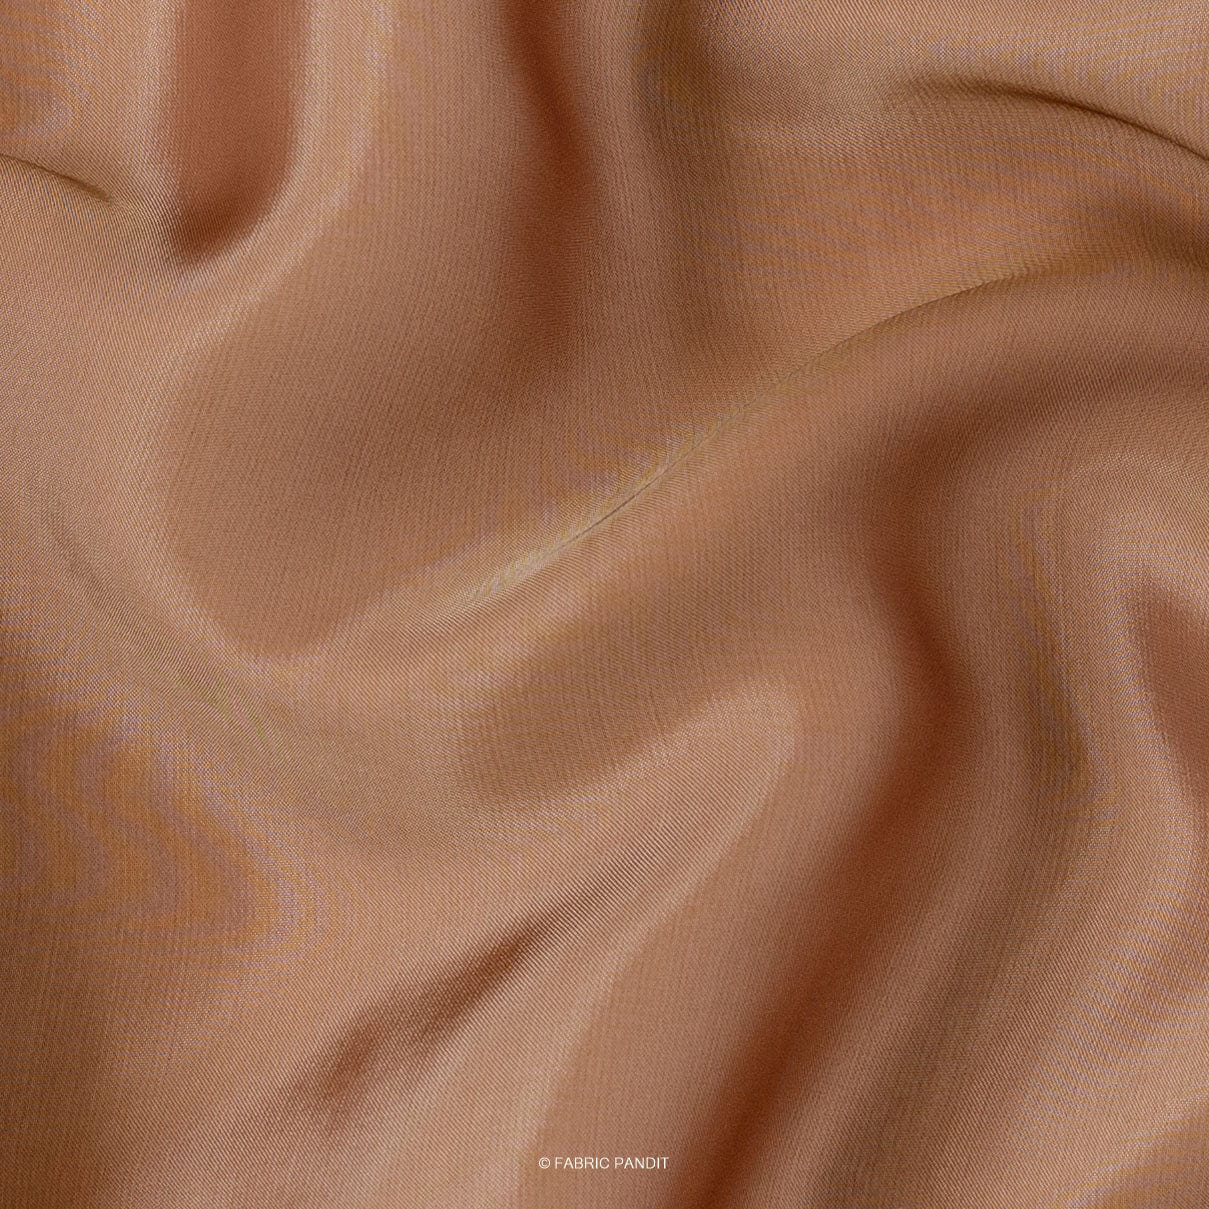 Fabric Pandit Fabric Sand Brown Plain Premium Organza Fabric (Width 44 Inches)